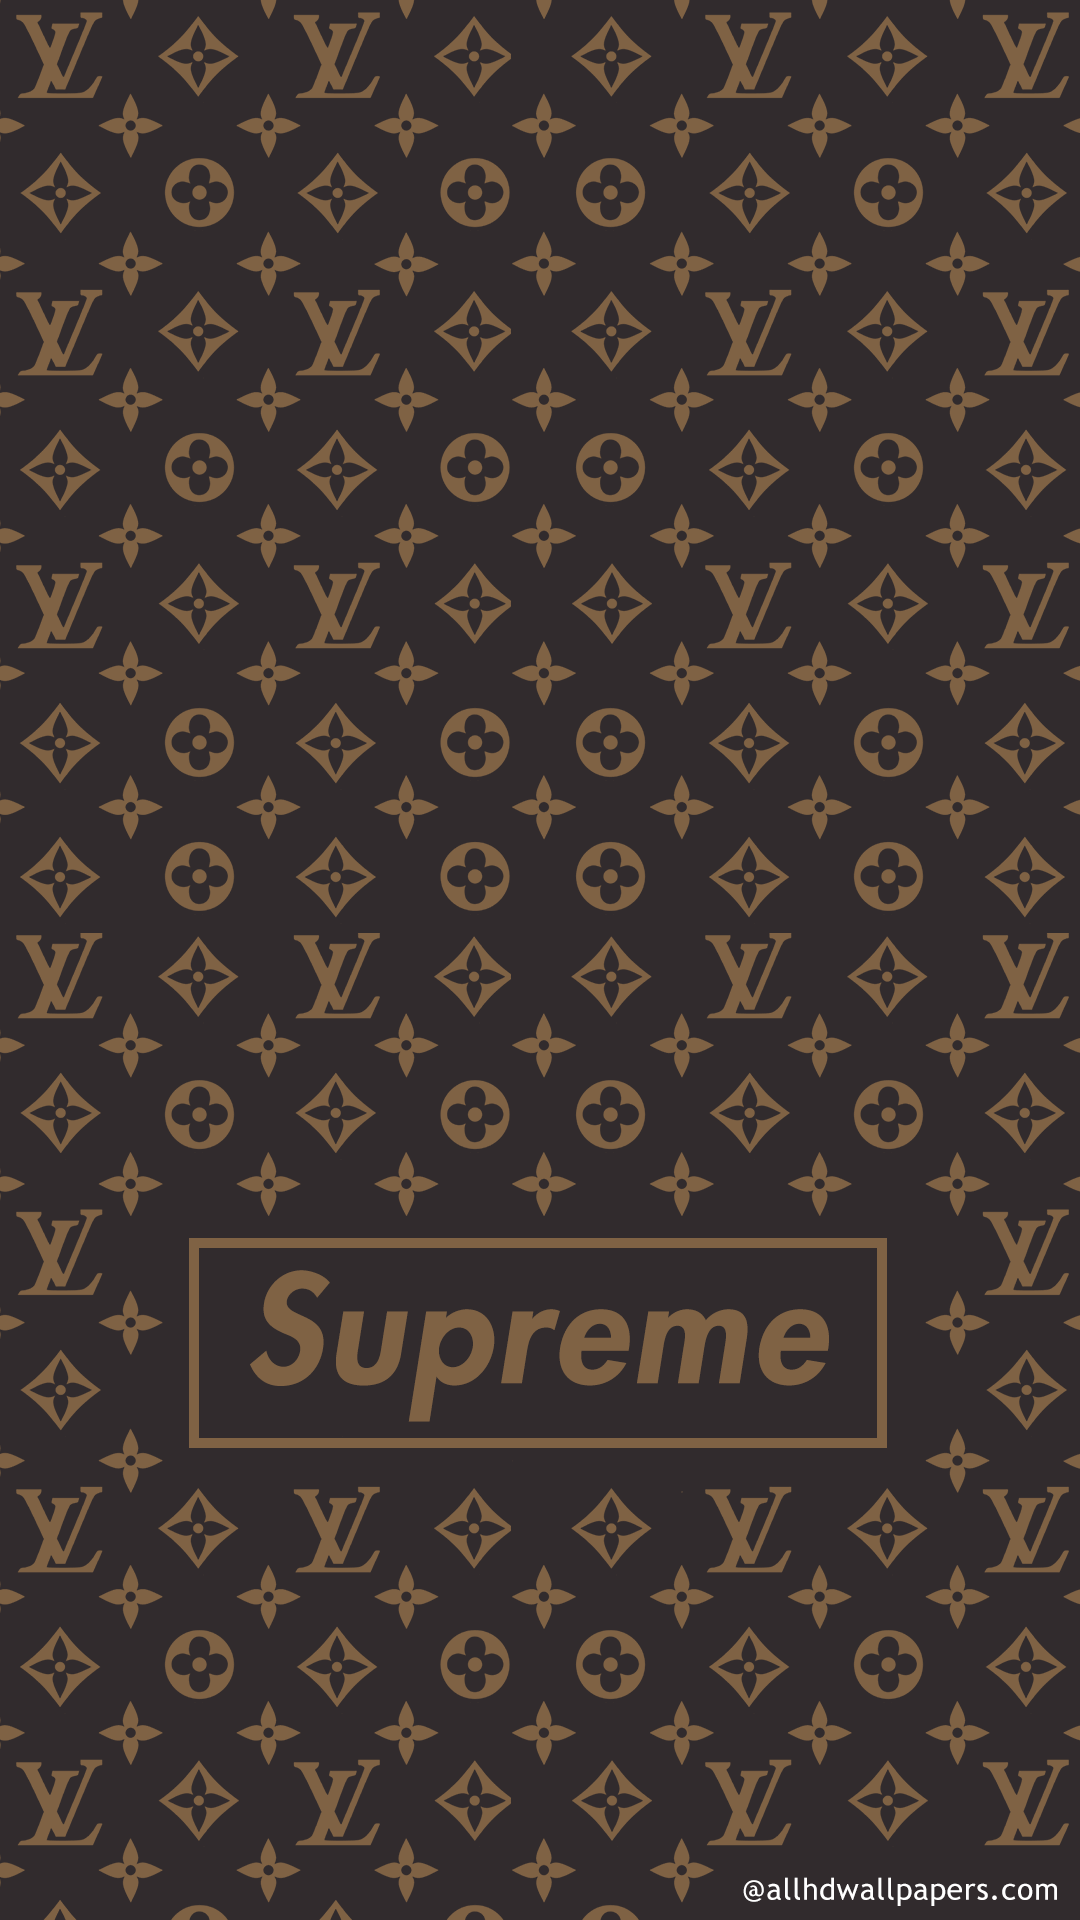 Supreme Wallpaper in 4K. Supreme iphone wallpaper, Supreme wallpaper, Supreme wallpaper hd